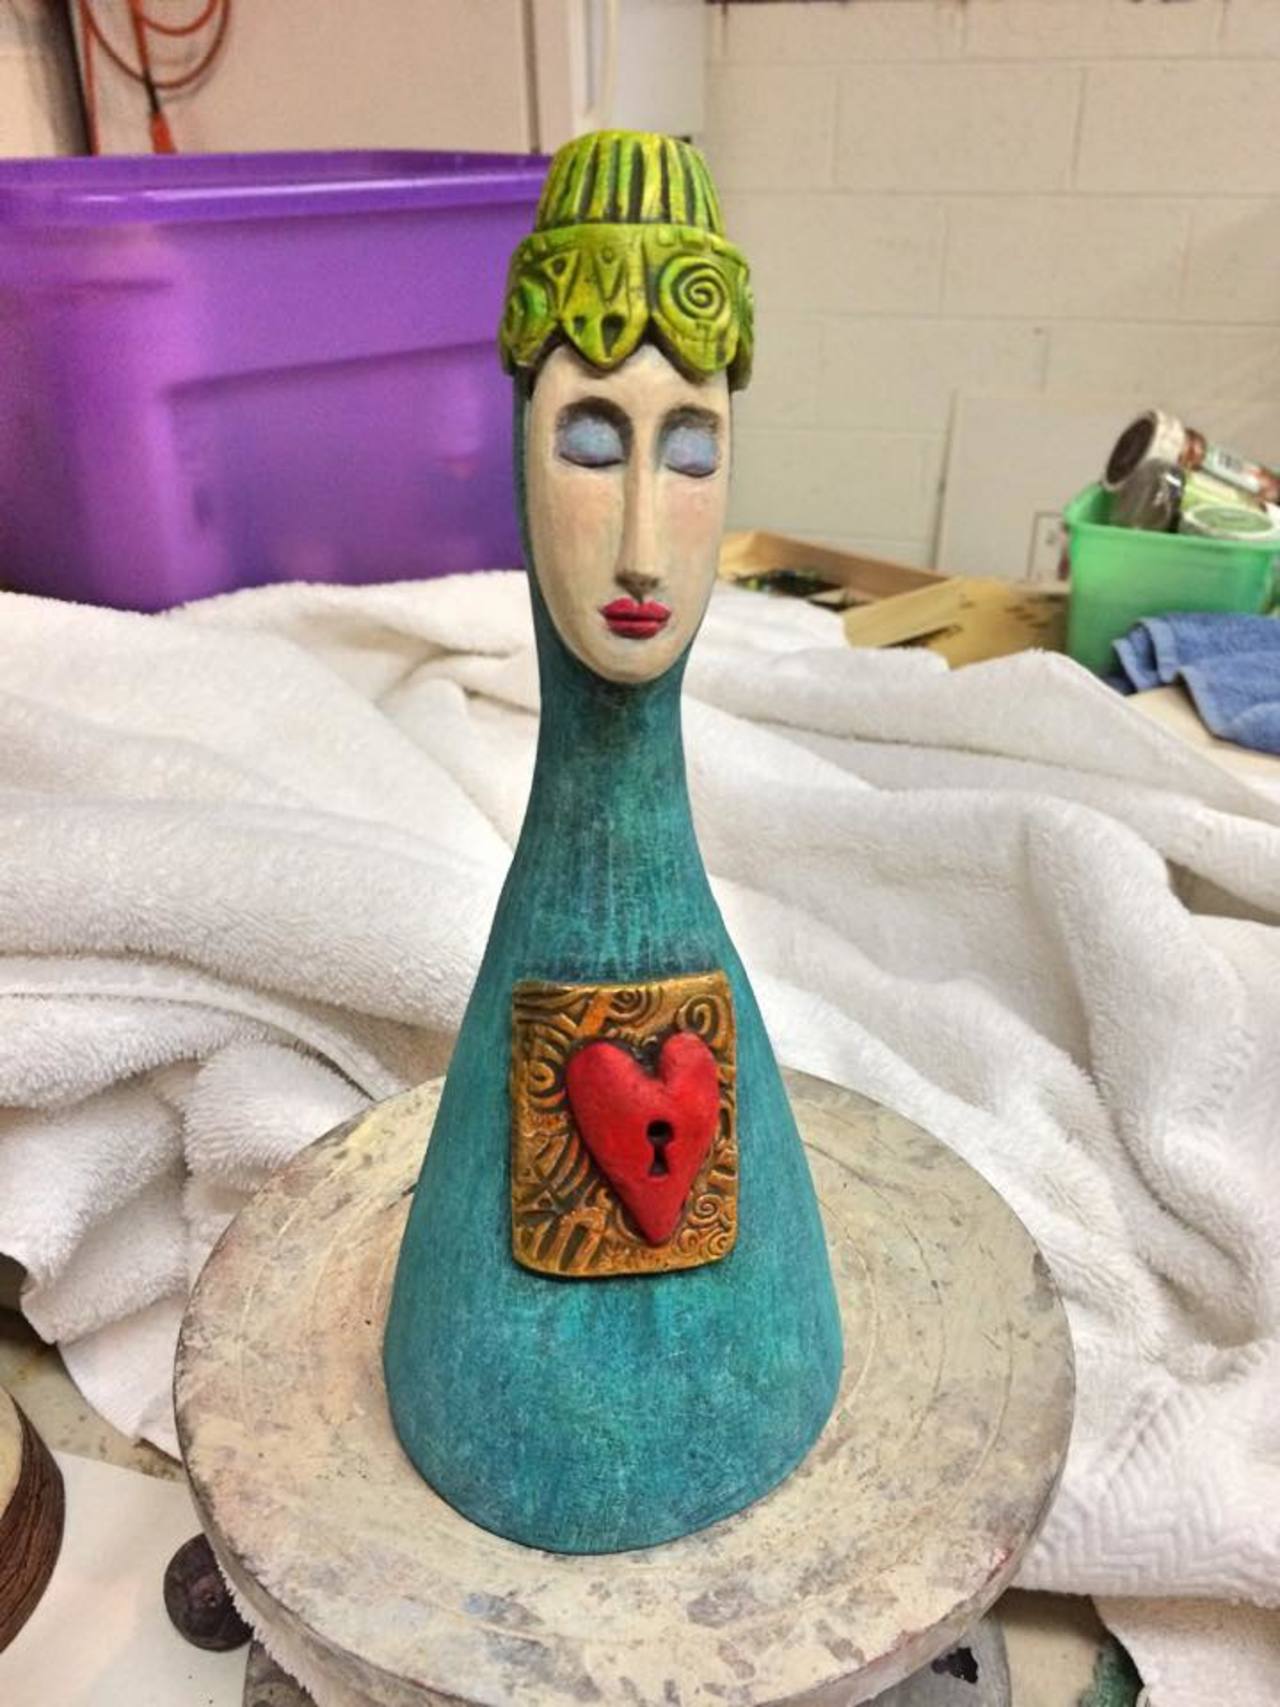 New series of ceramic bells #create #art #Iloveclay http://t.co/M7Kwk5rMZ7